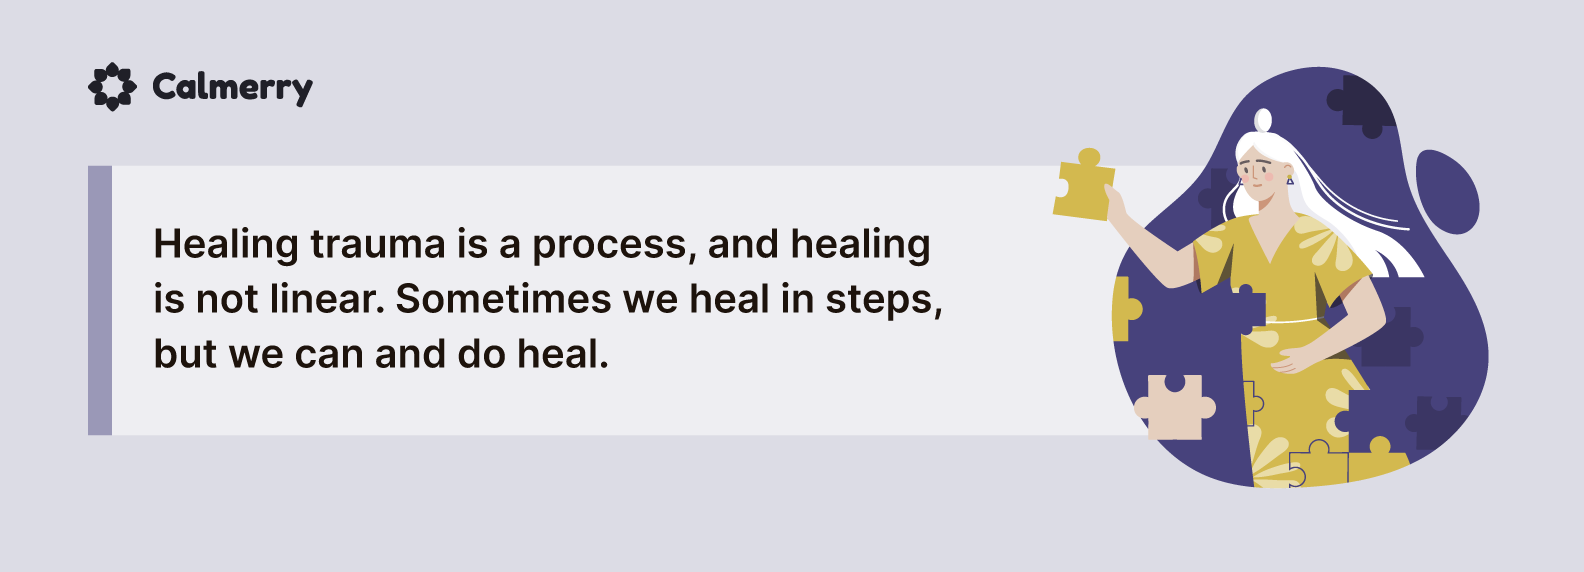 Healing trauma is a process